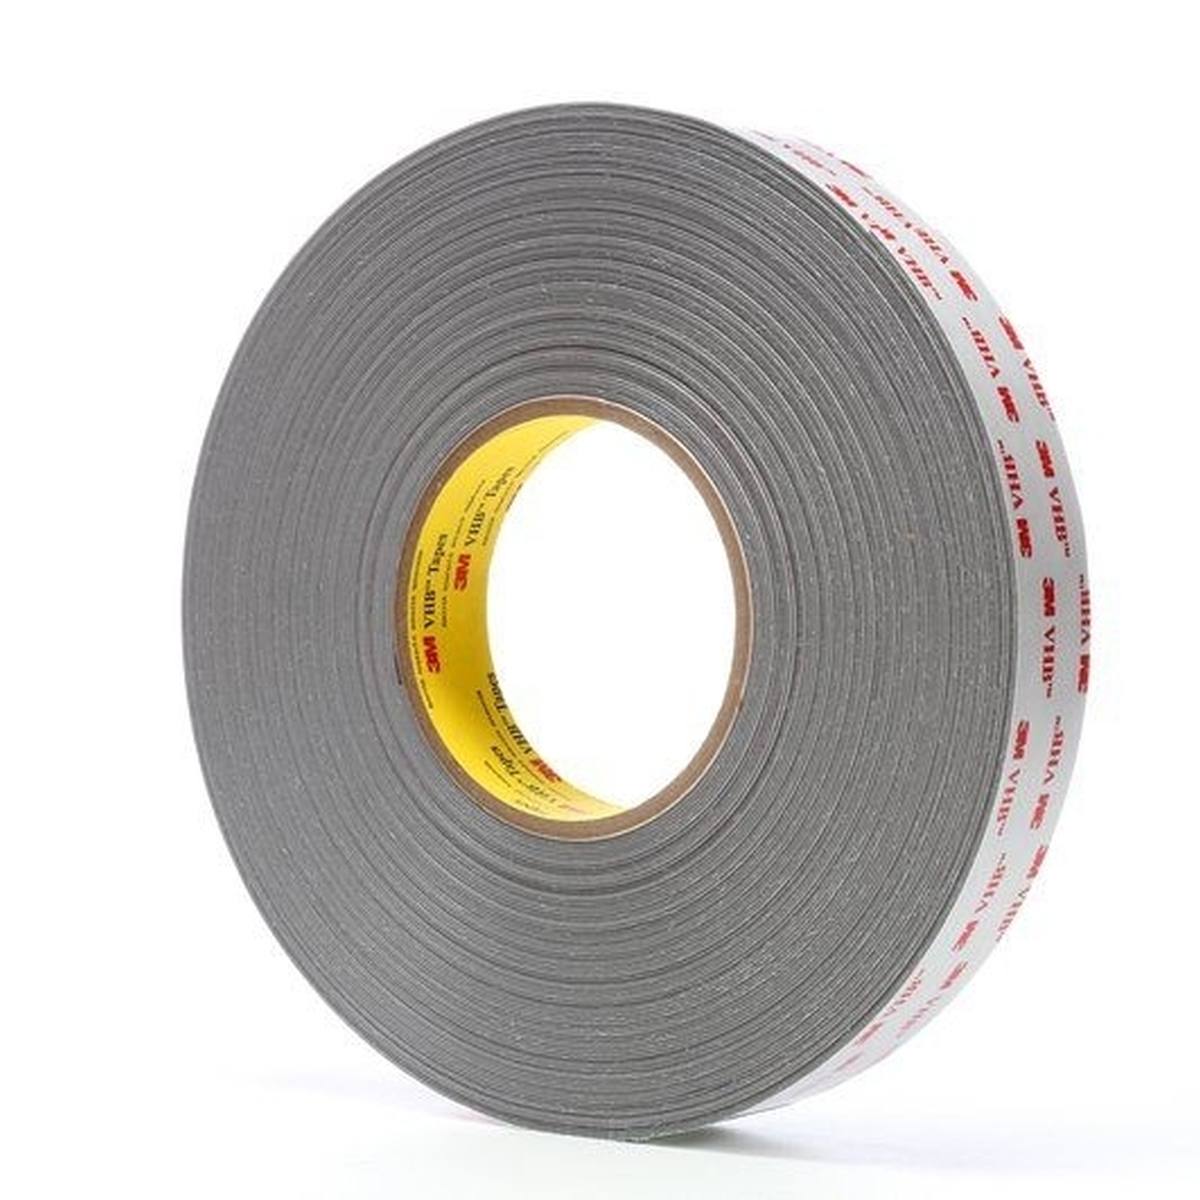 3M VHB Adhesive tape RP 25P, grey, 19.1 mm x 33 m, 0.6 mm